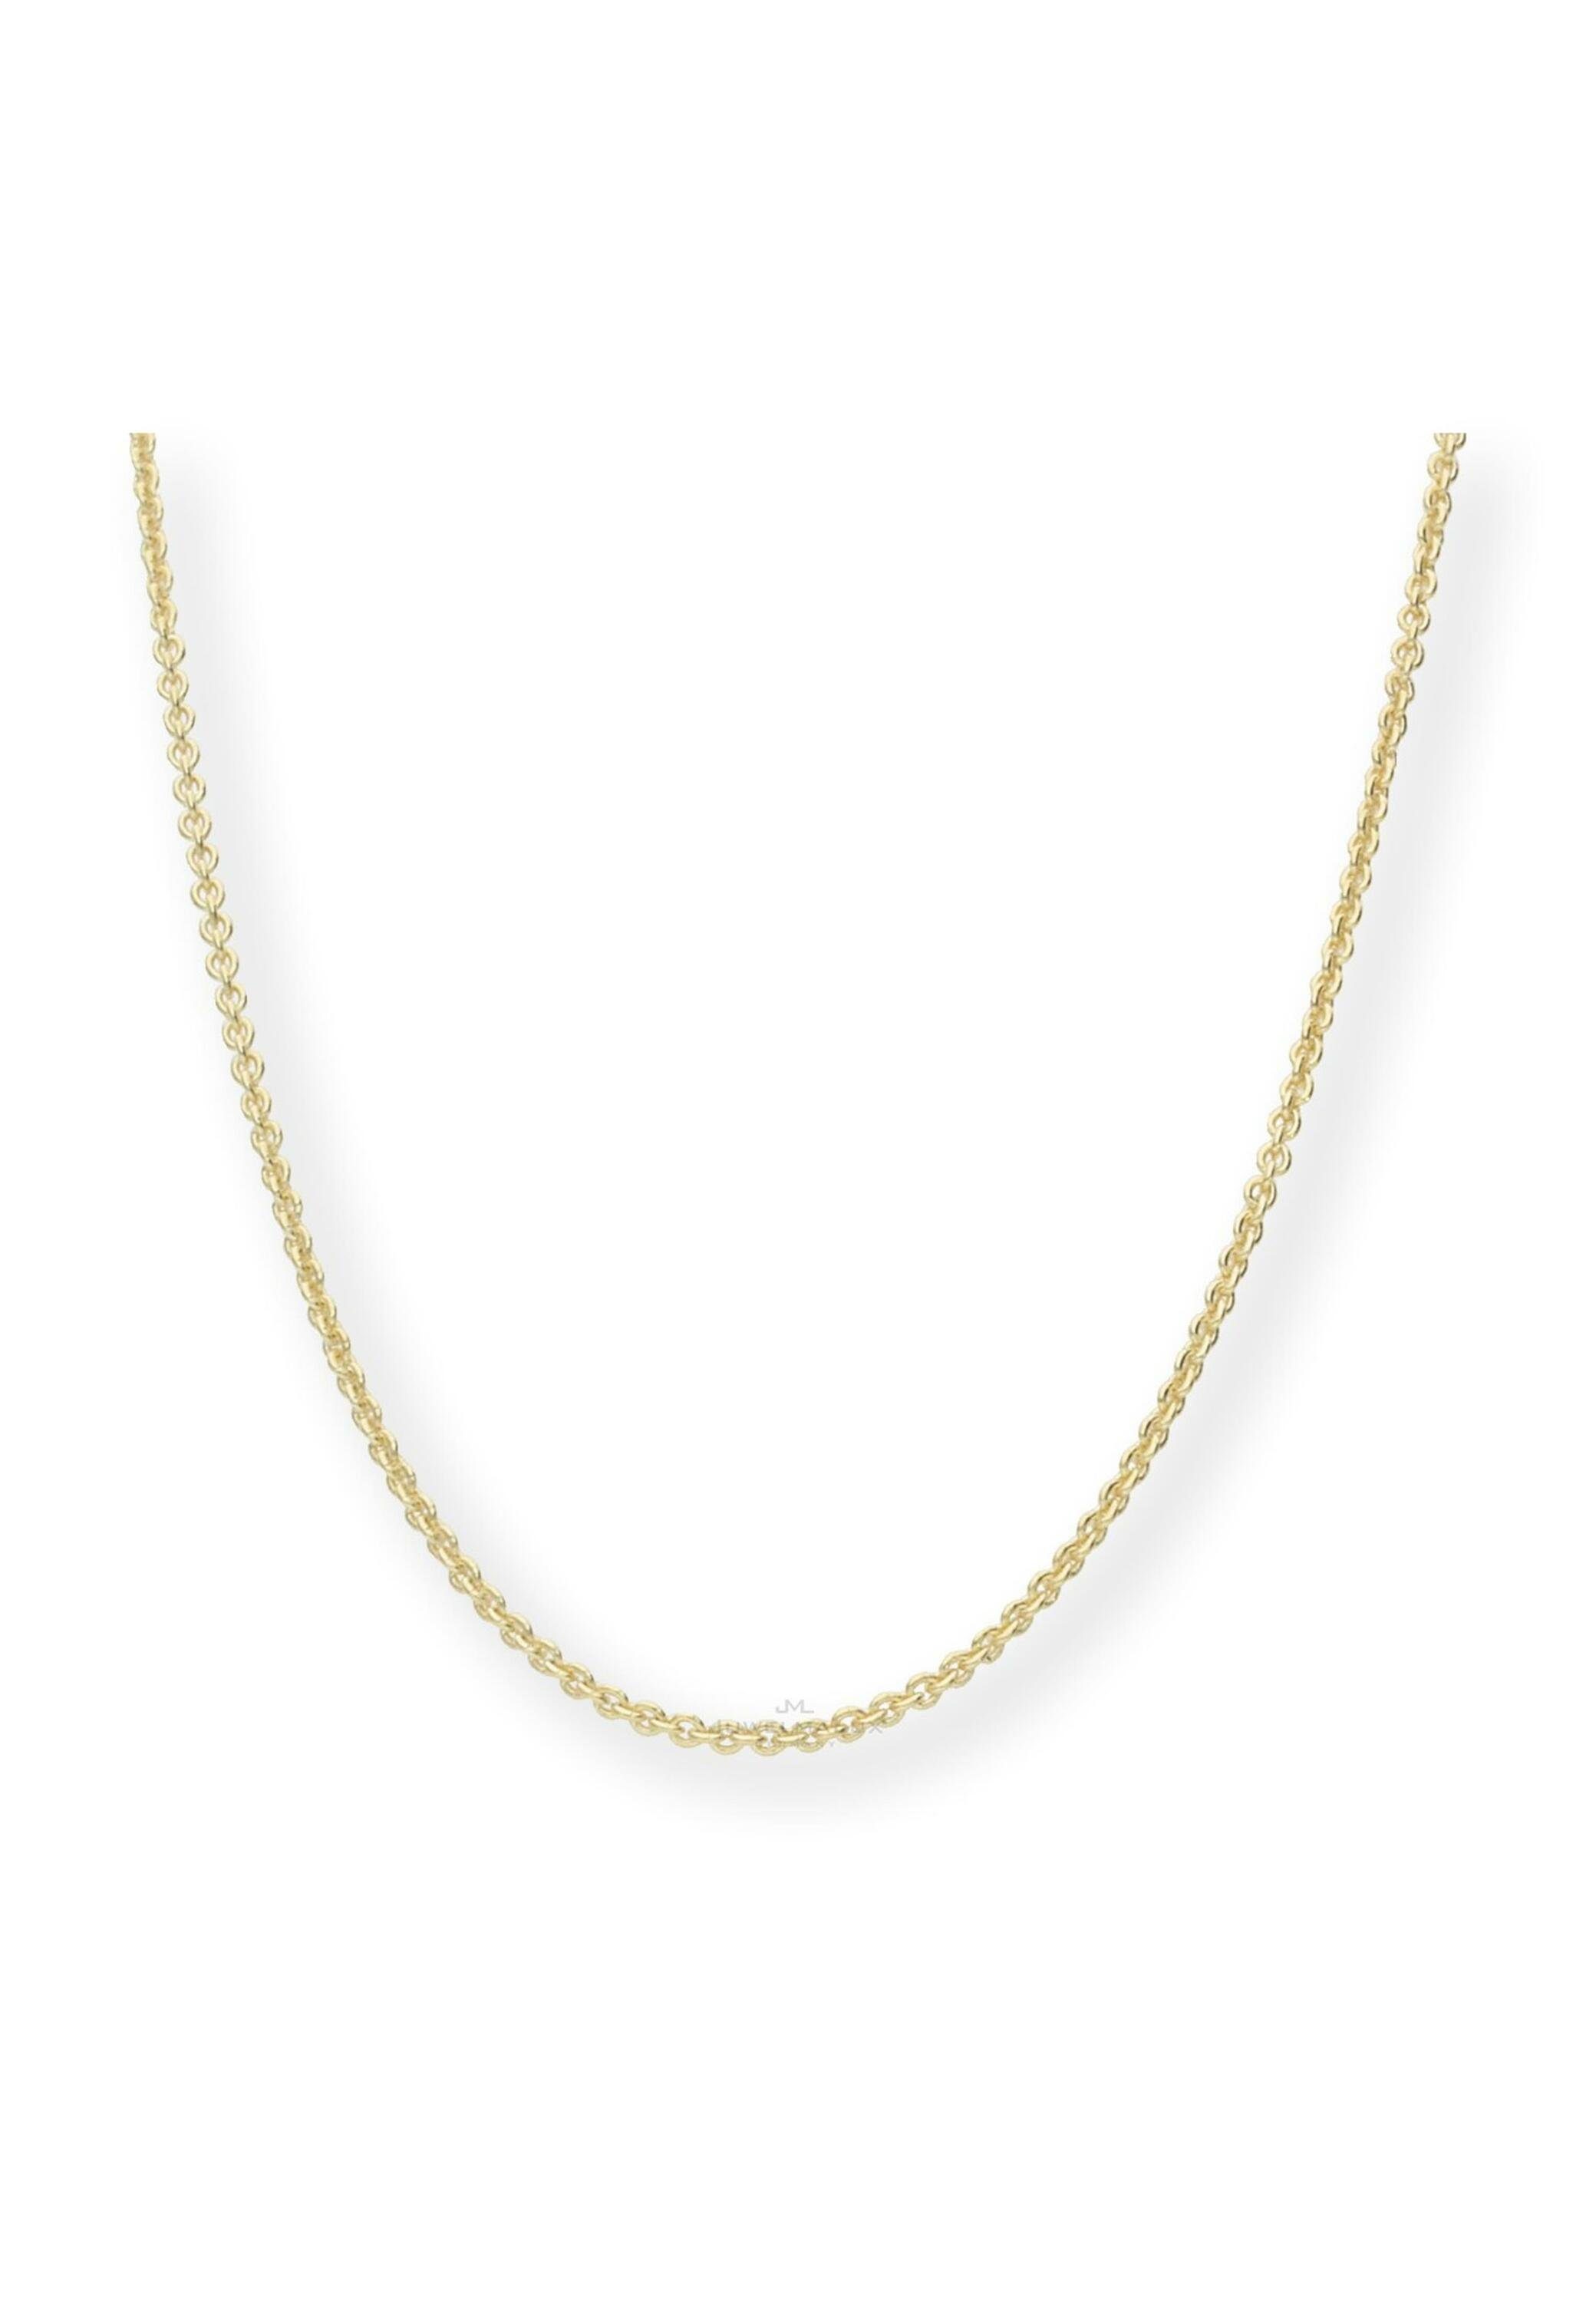 Kinder Accessoires JuwelmaLux Silberkette Halskette gold Mädchen Anker (1-tlg), 925er Silber Gold plattiert, inkl. Schmuckschach